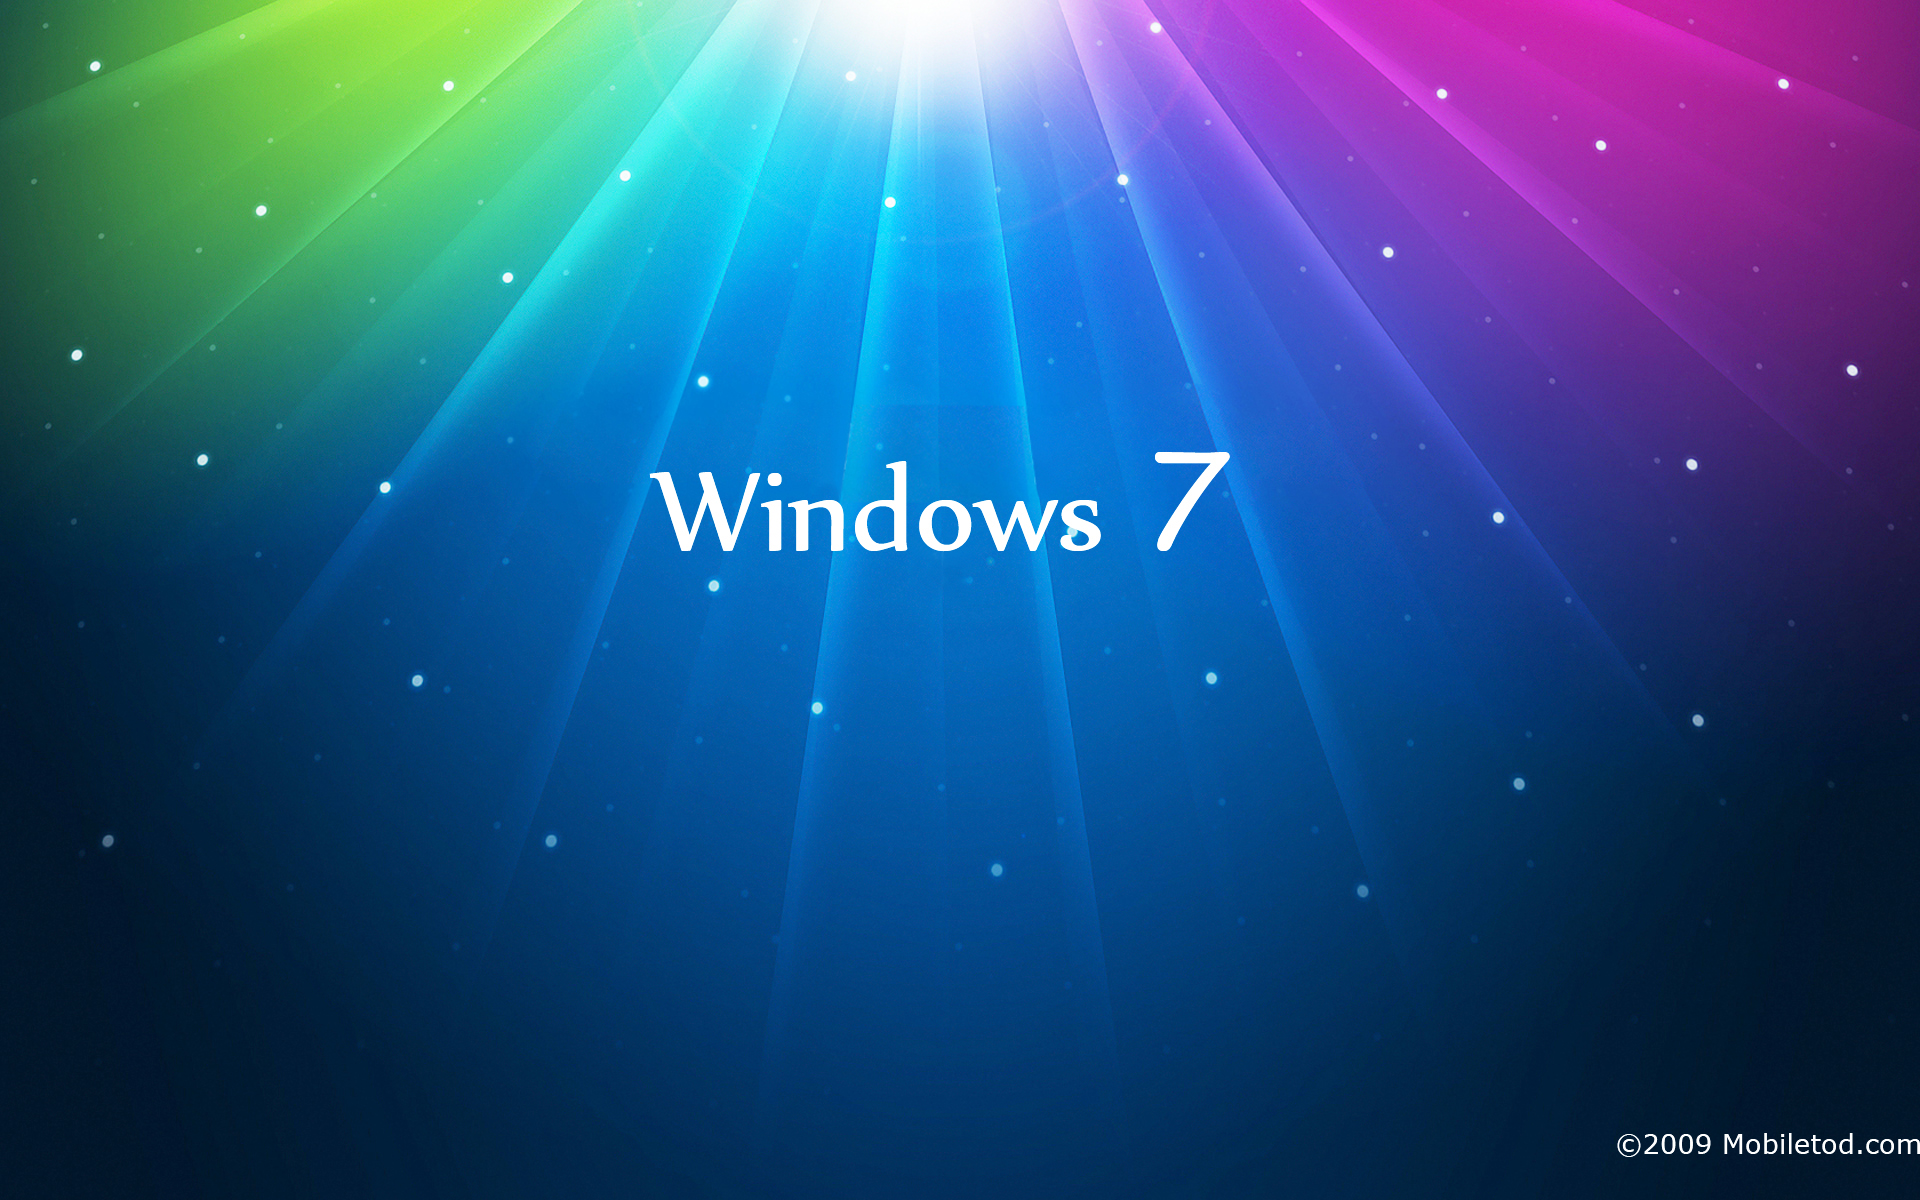 Windows 7 wallpaper aurora - visit http / / www.xplodehub.com / for